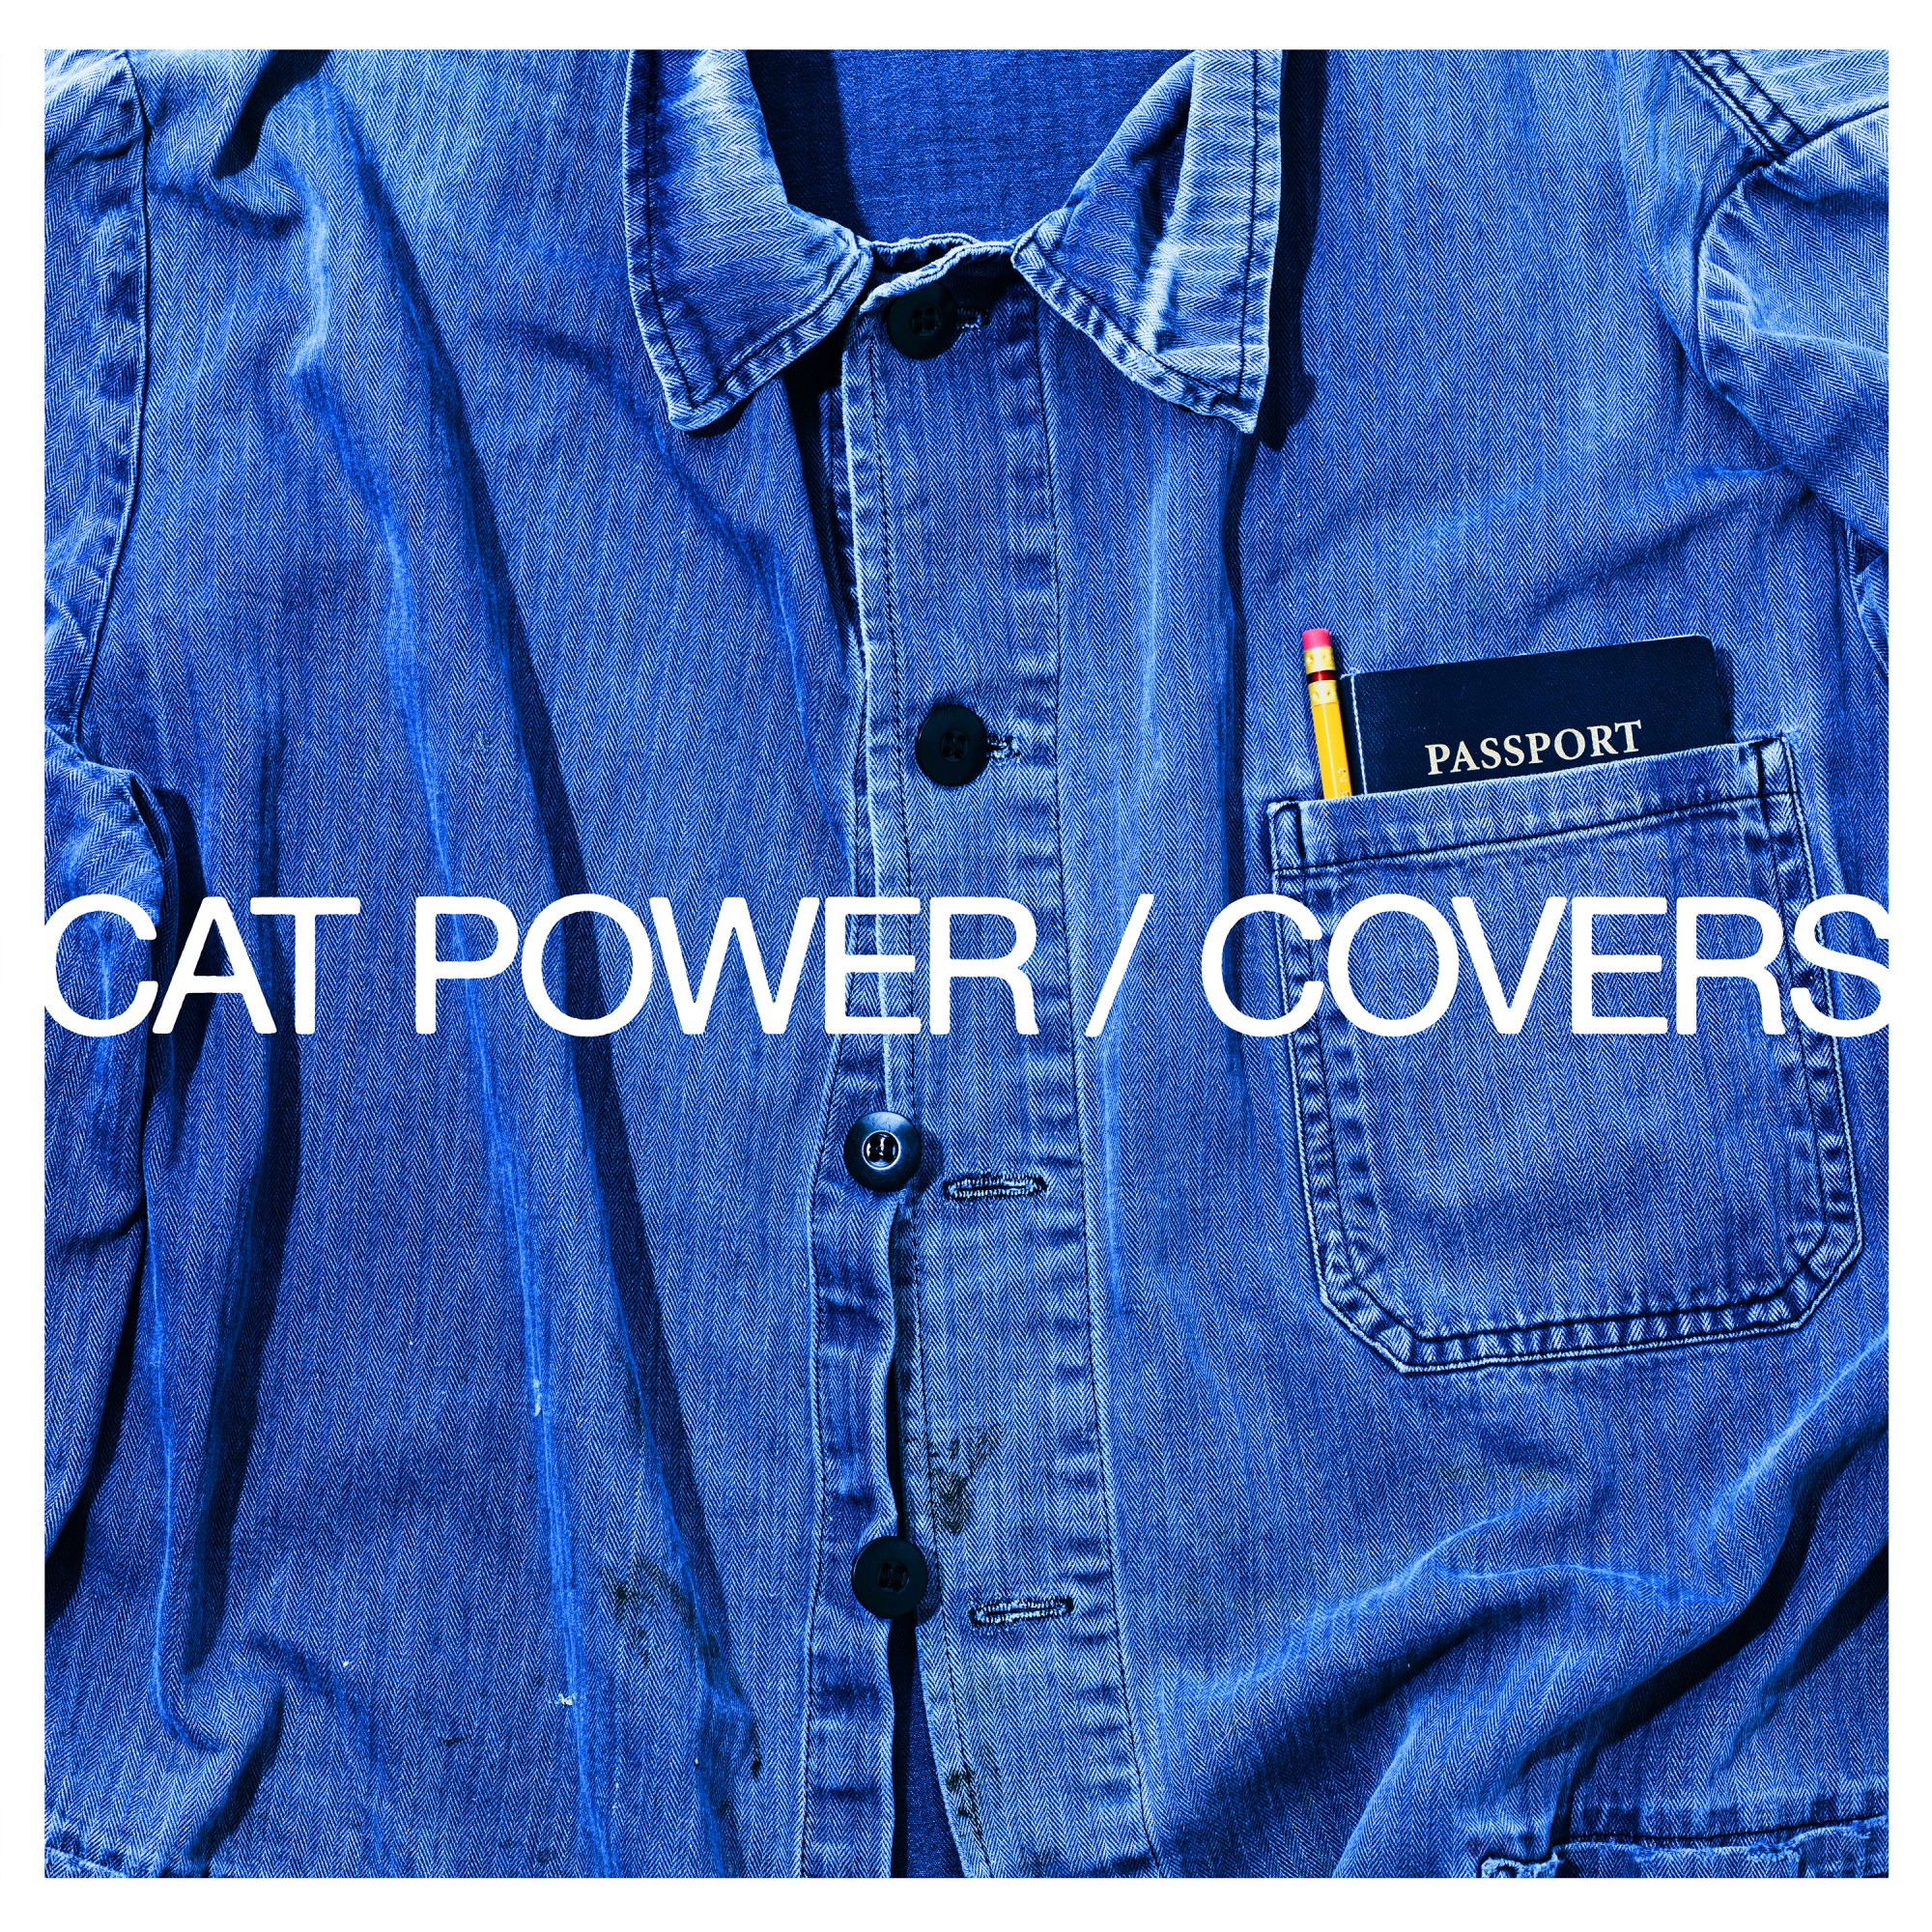 Cat Power – Covers artwork